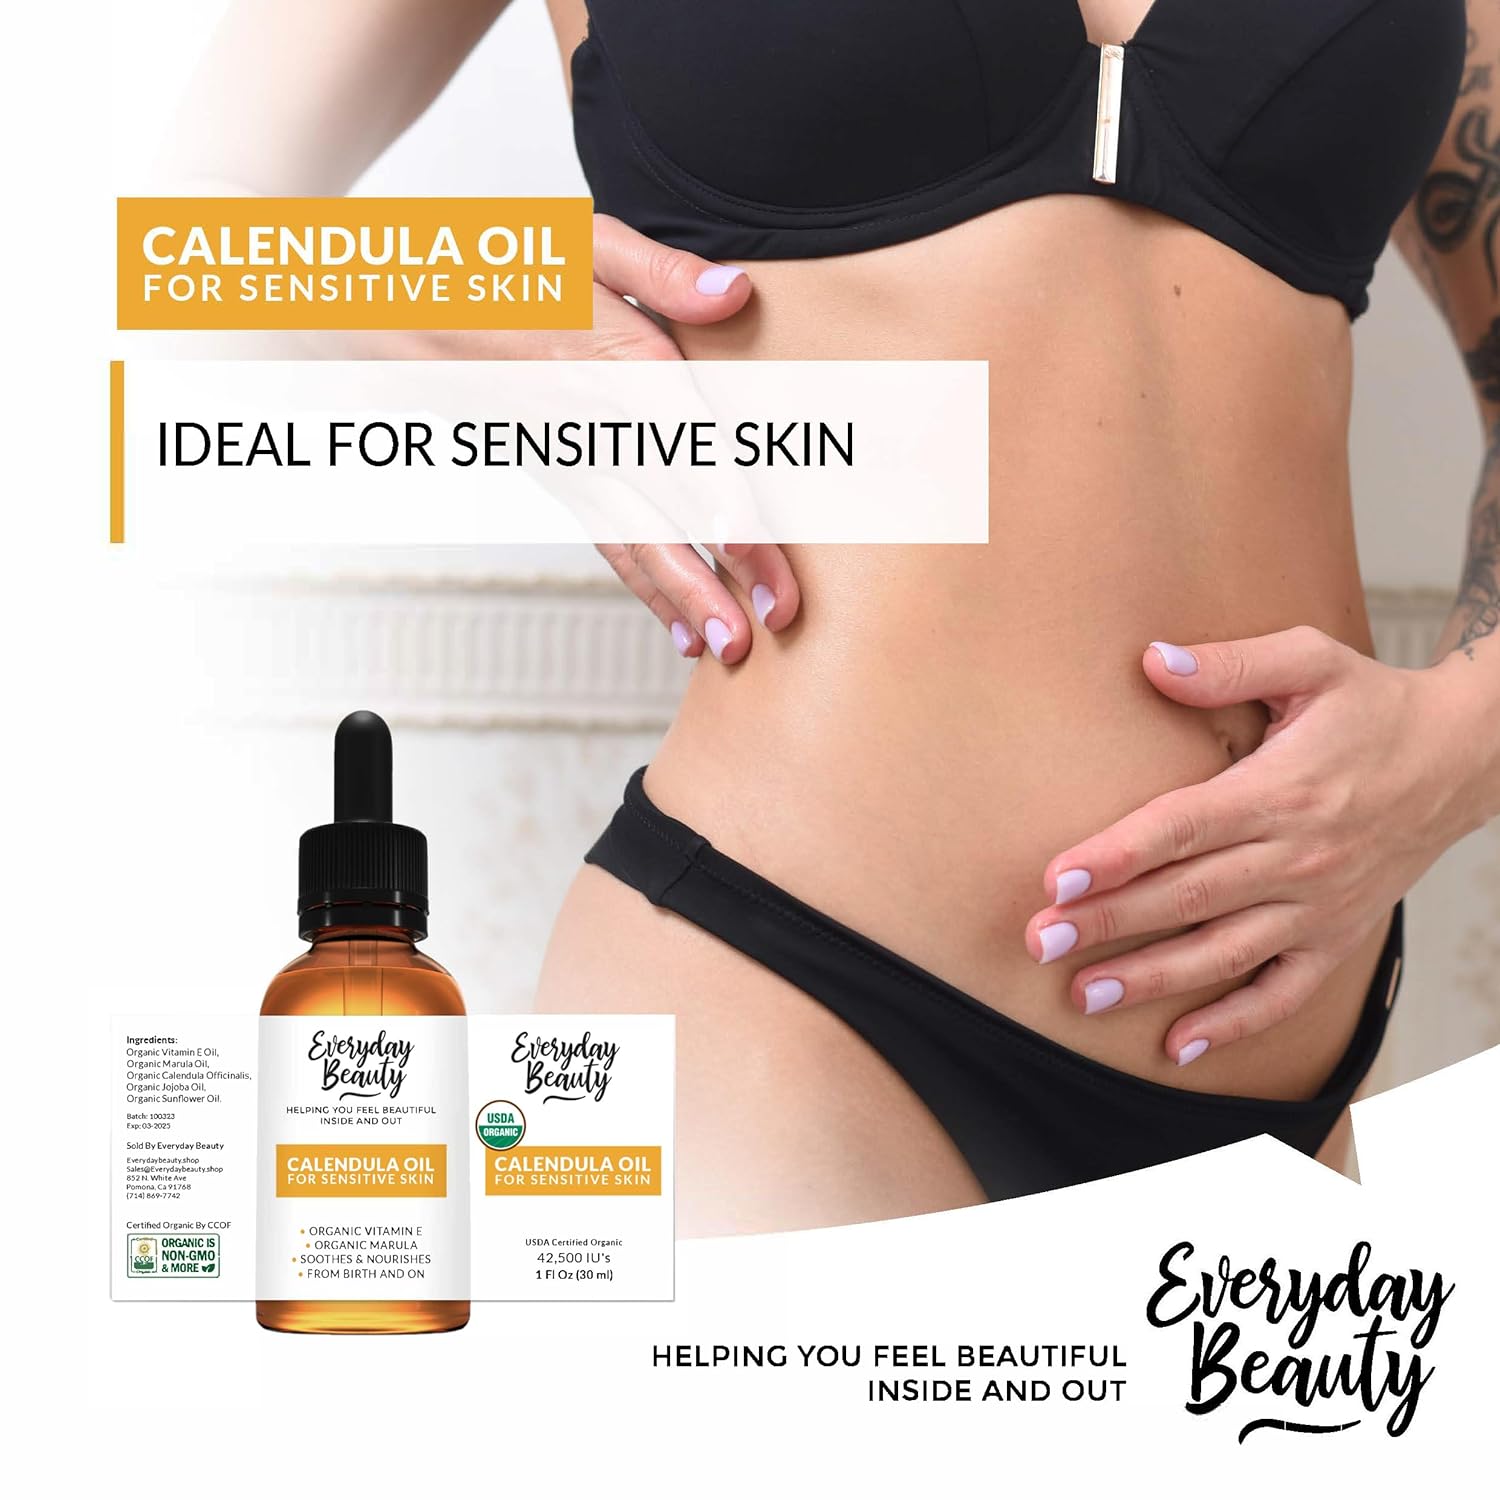 Organic Calendula Oil For Sensitive Skin - USDA Certified 100% Natural Plant Based, Lightweight  Unscented Gentle Soothing Oil For Sensitive Skin - For Face, Skin  All Over - 1 Fl Oz Glass  Dropper